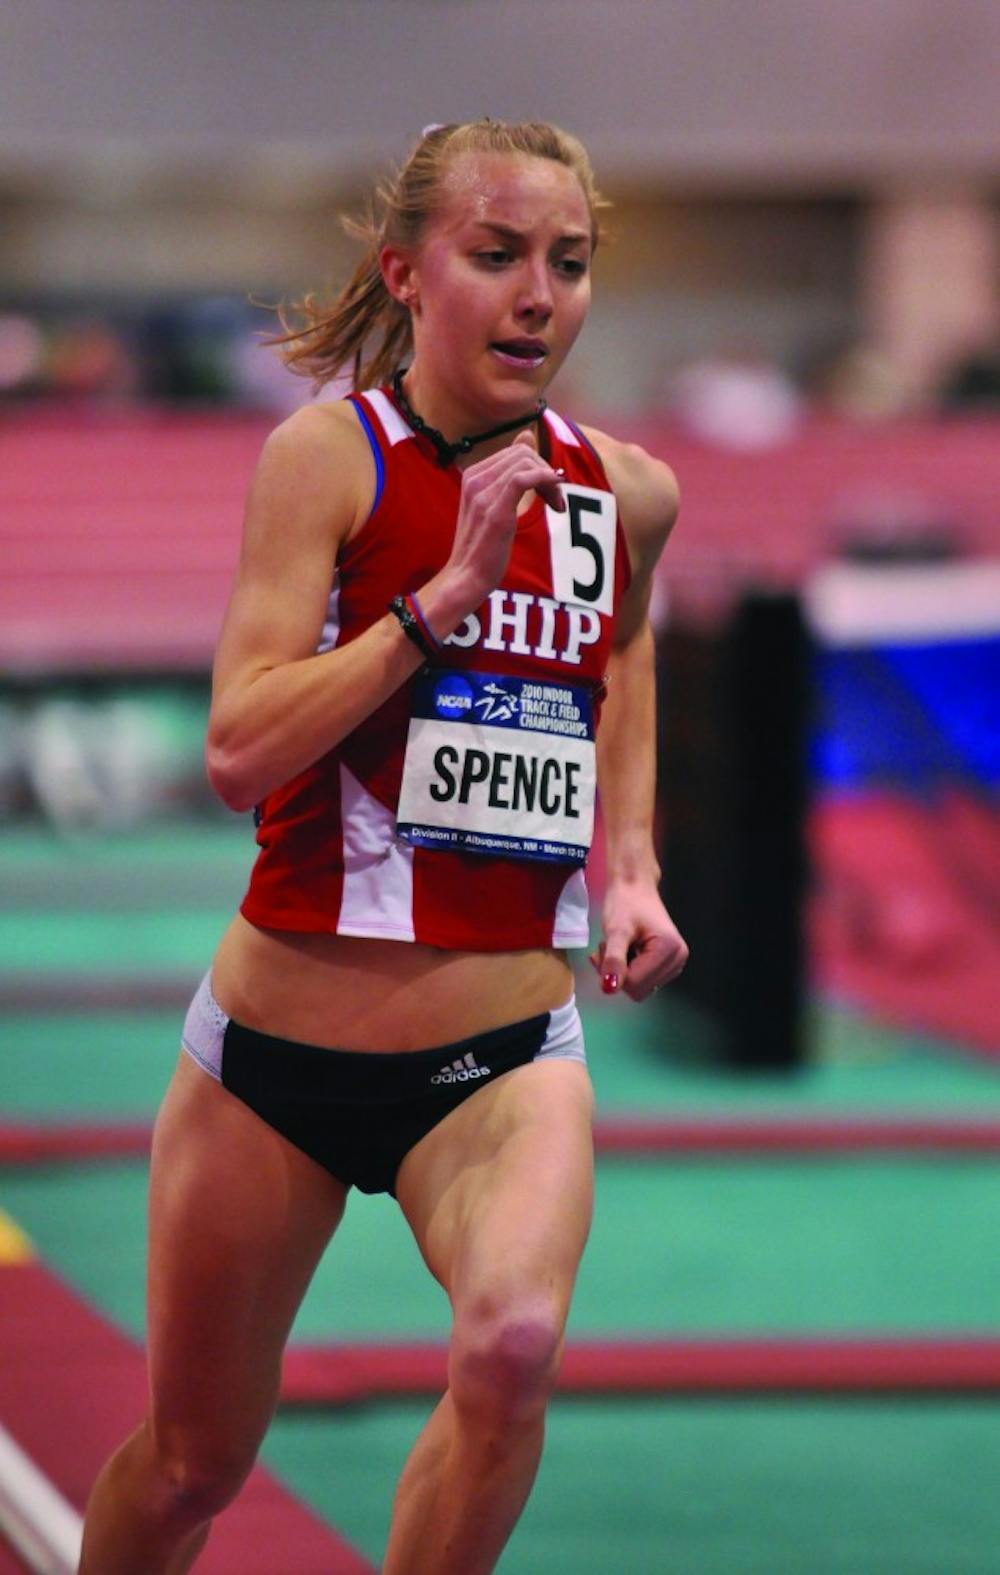 SU alumna Neely Spence Gracey conquers the Boston Marathon